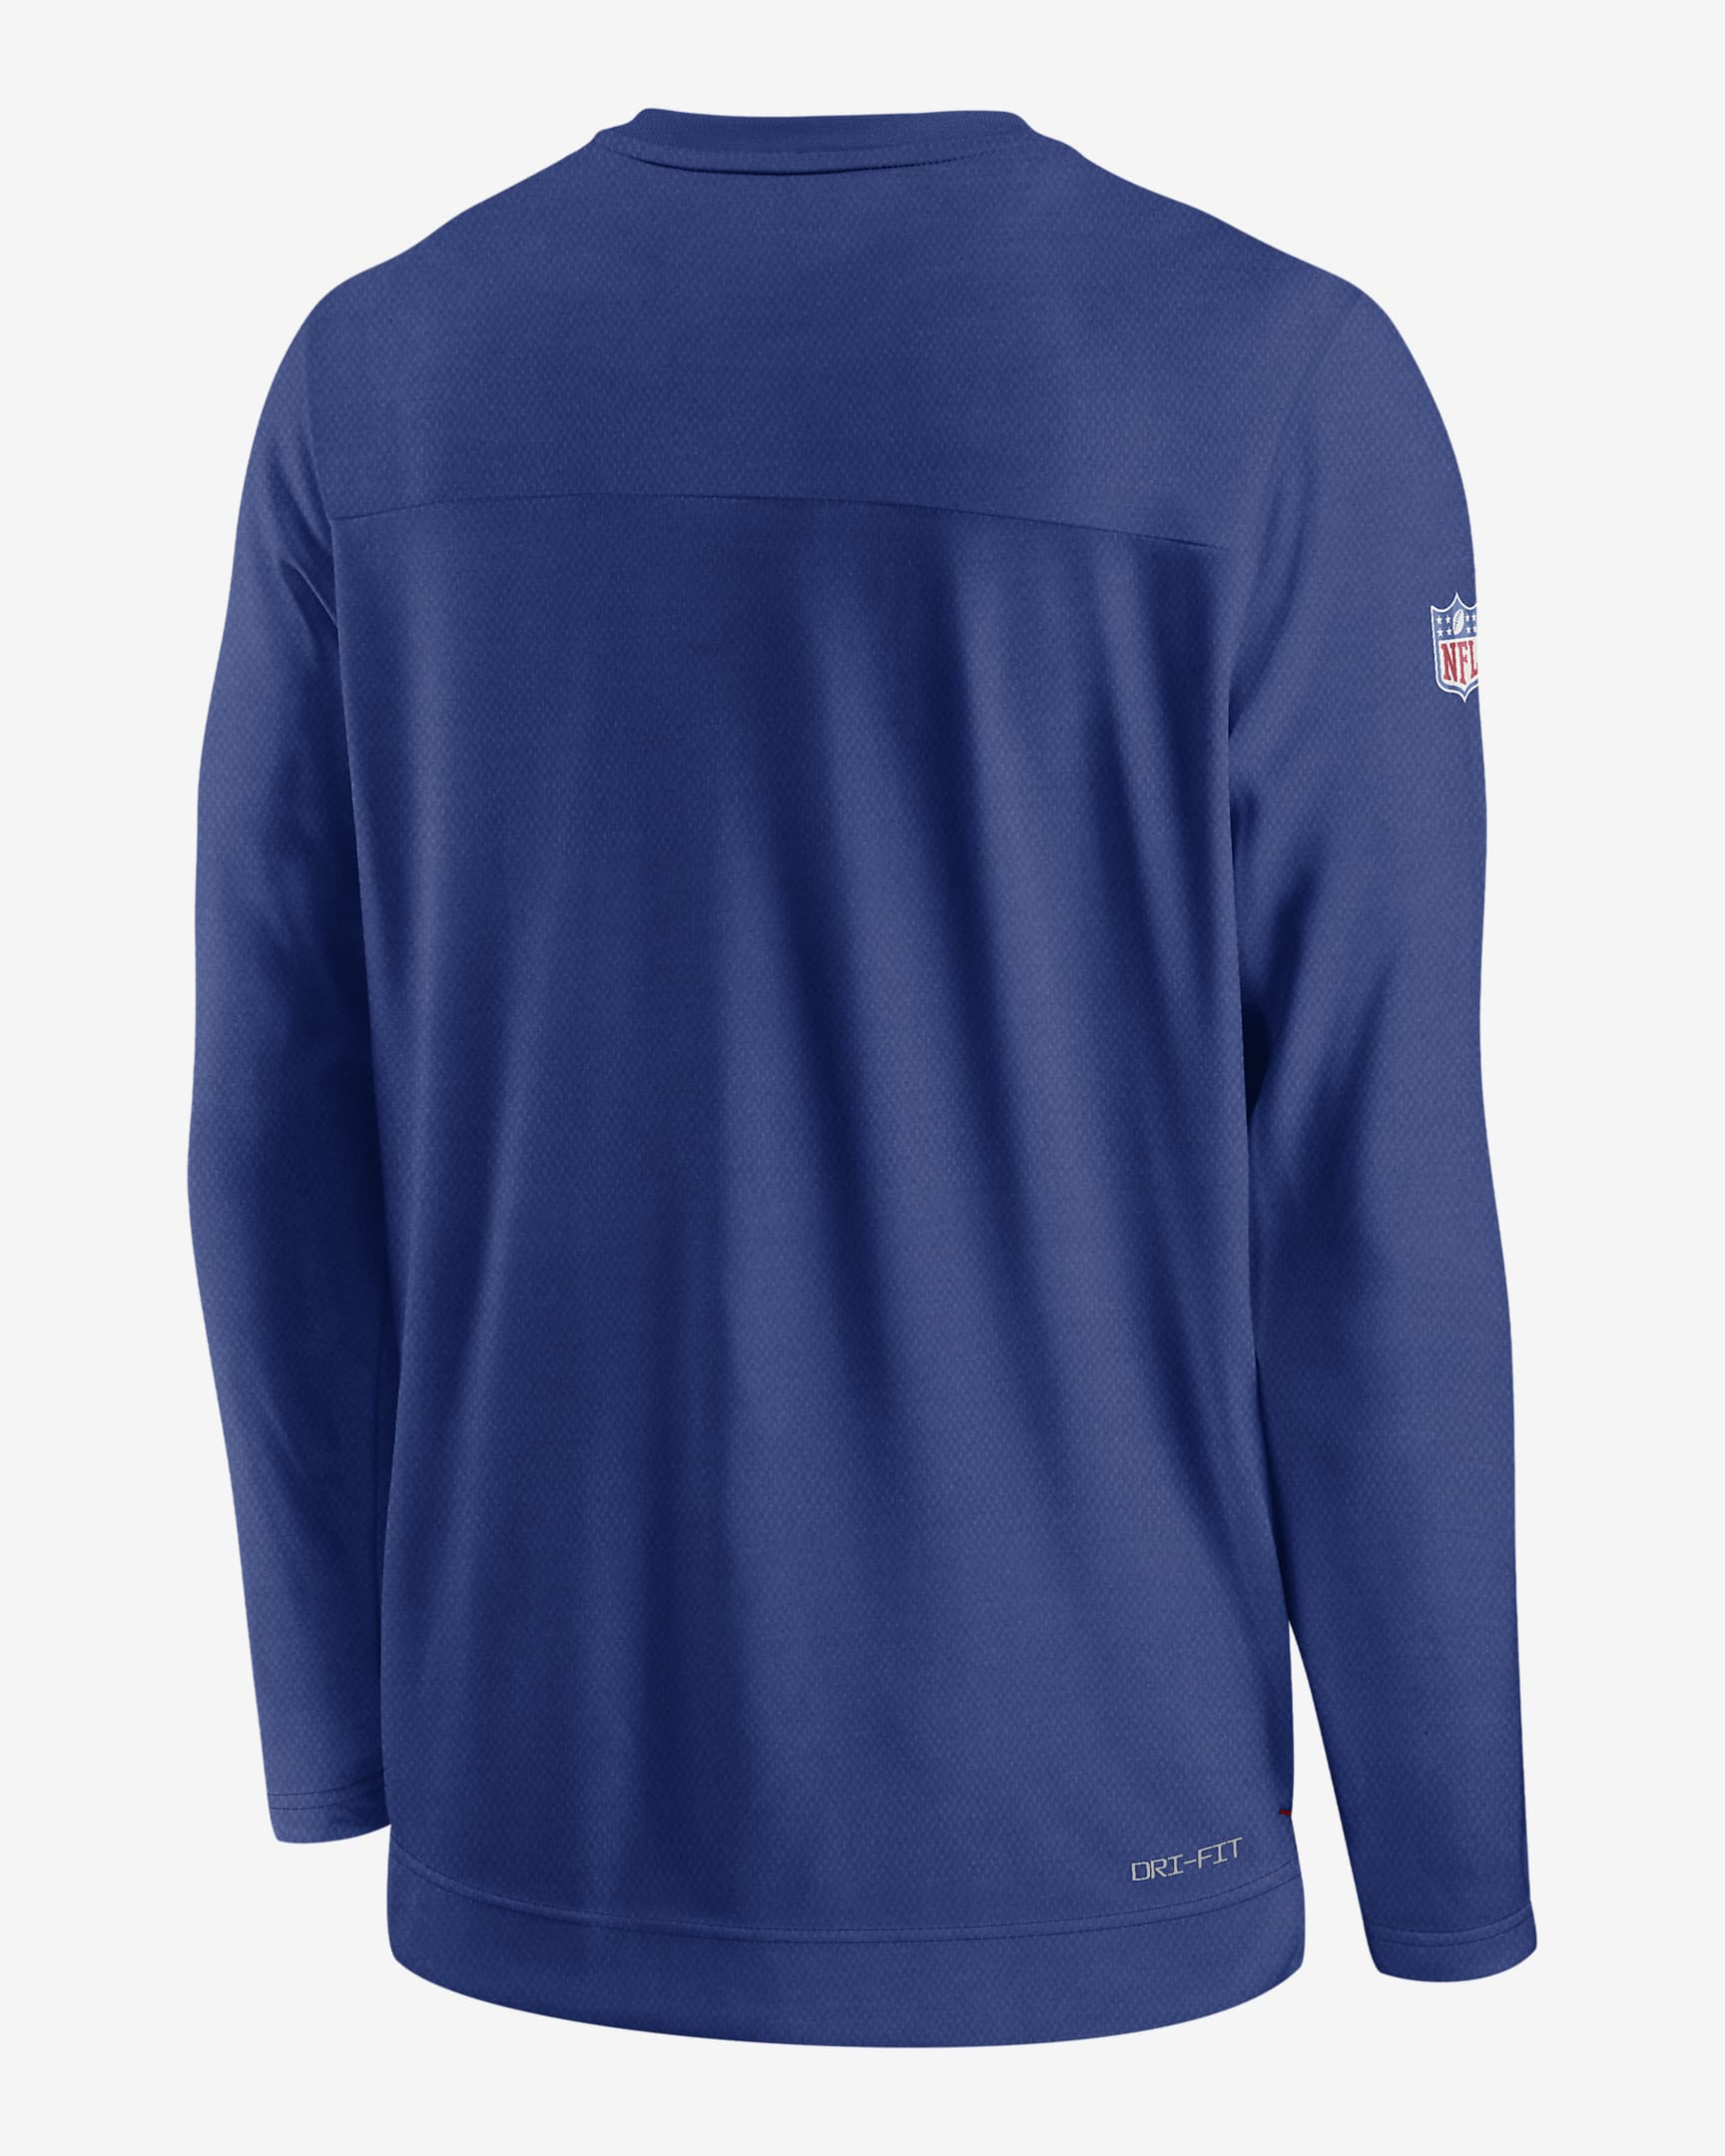 Nike Dri-FIT Lockup (NFL New York Giants) Men's Long-Sleeve Top. Nike.com